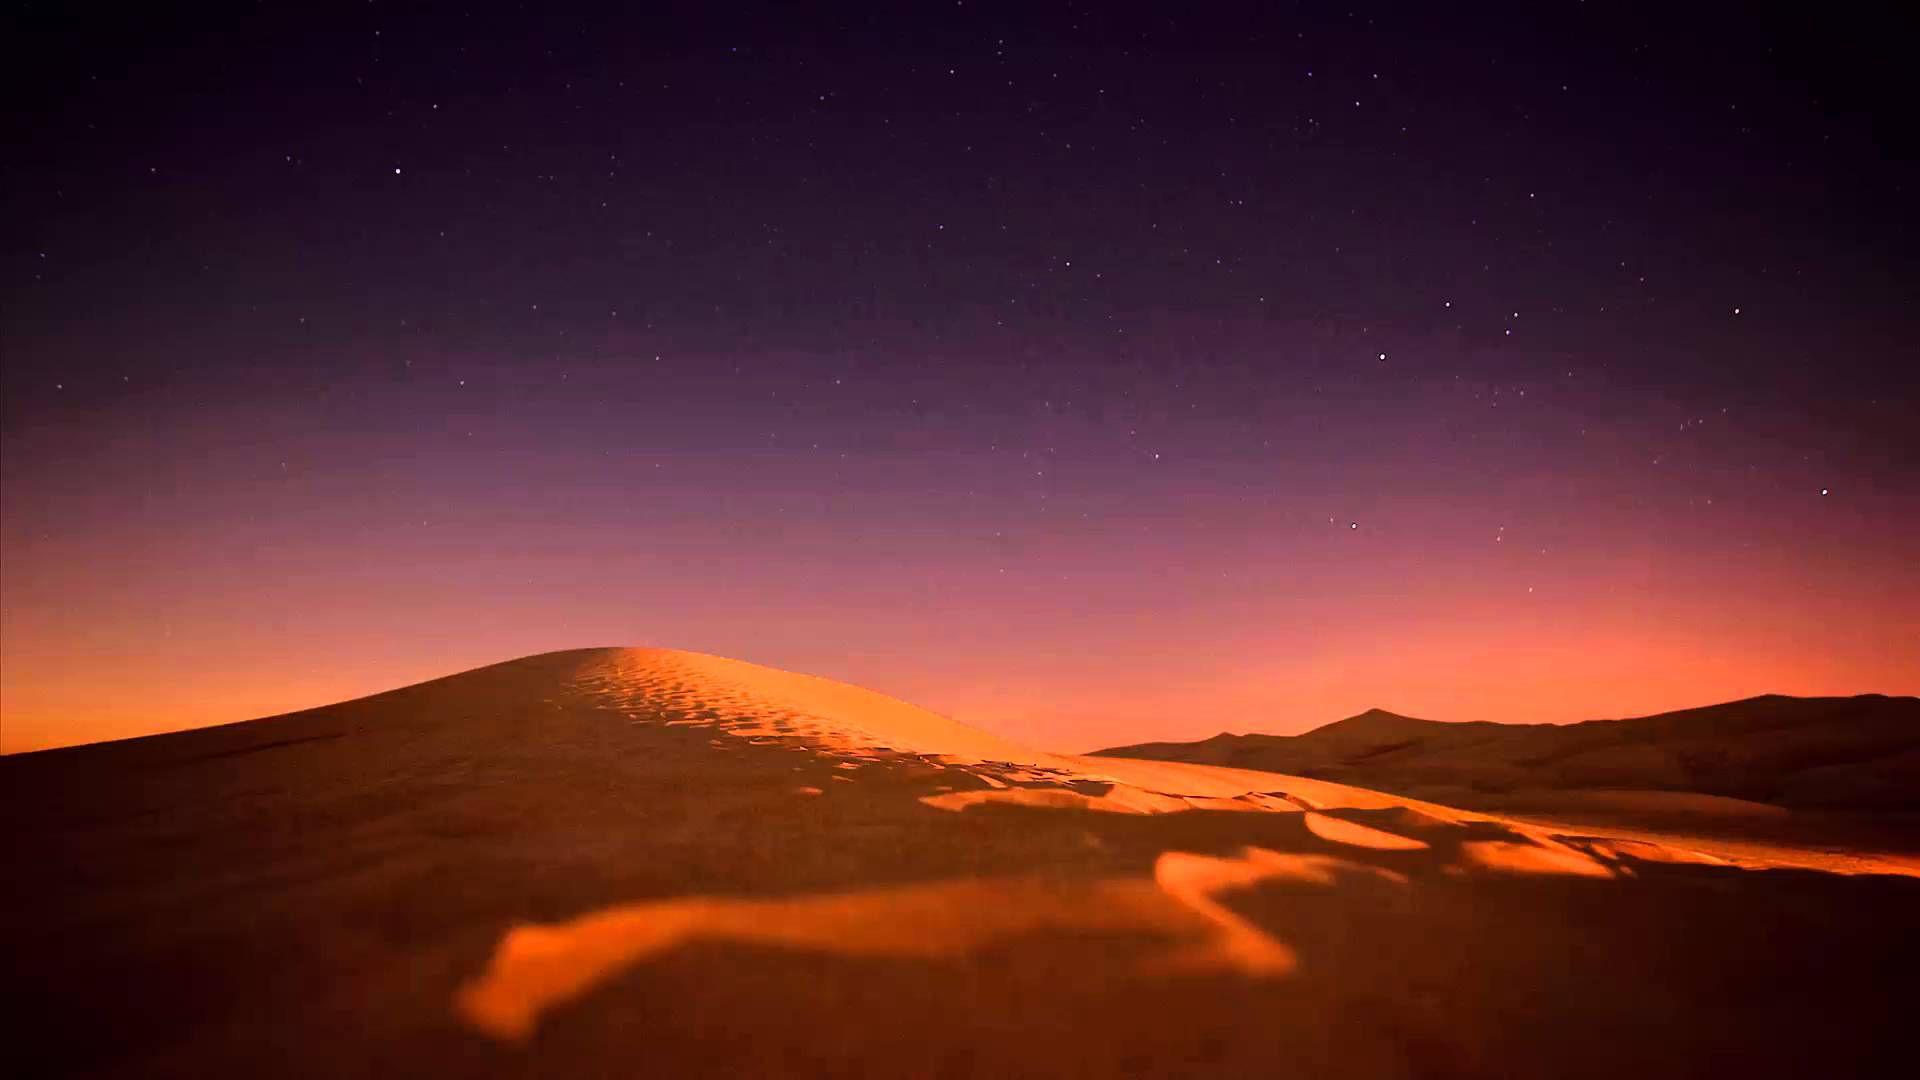 Arabian Desert Night Wallpapers - Top Free Arabian Desert Night ...